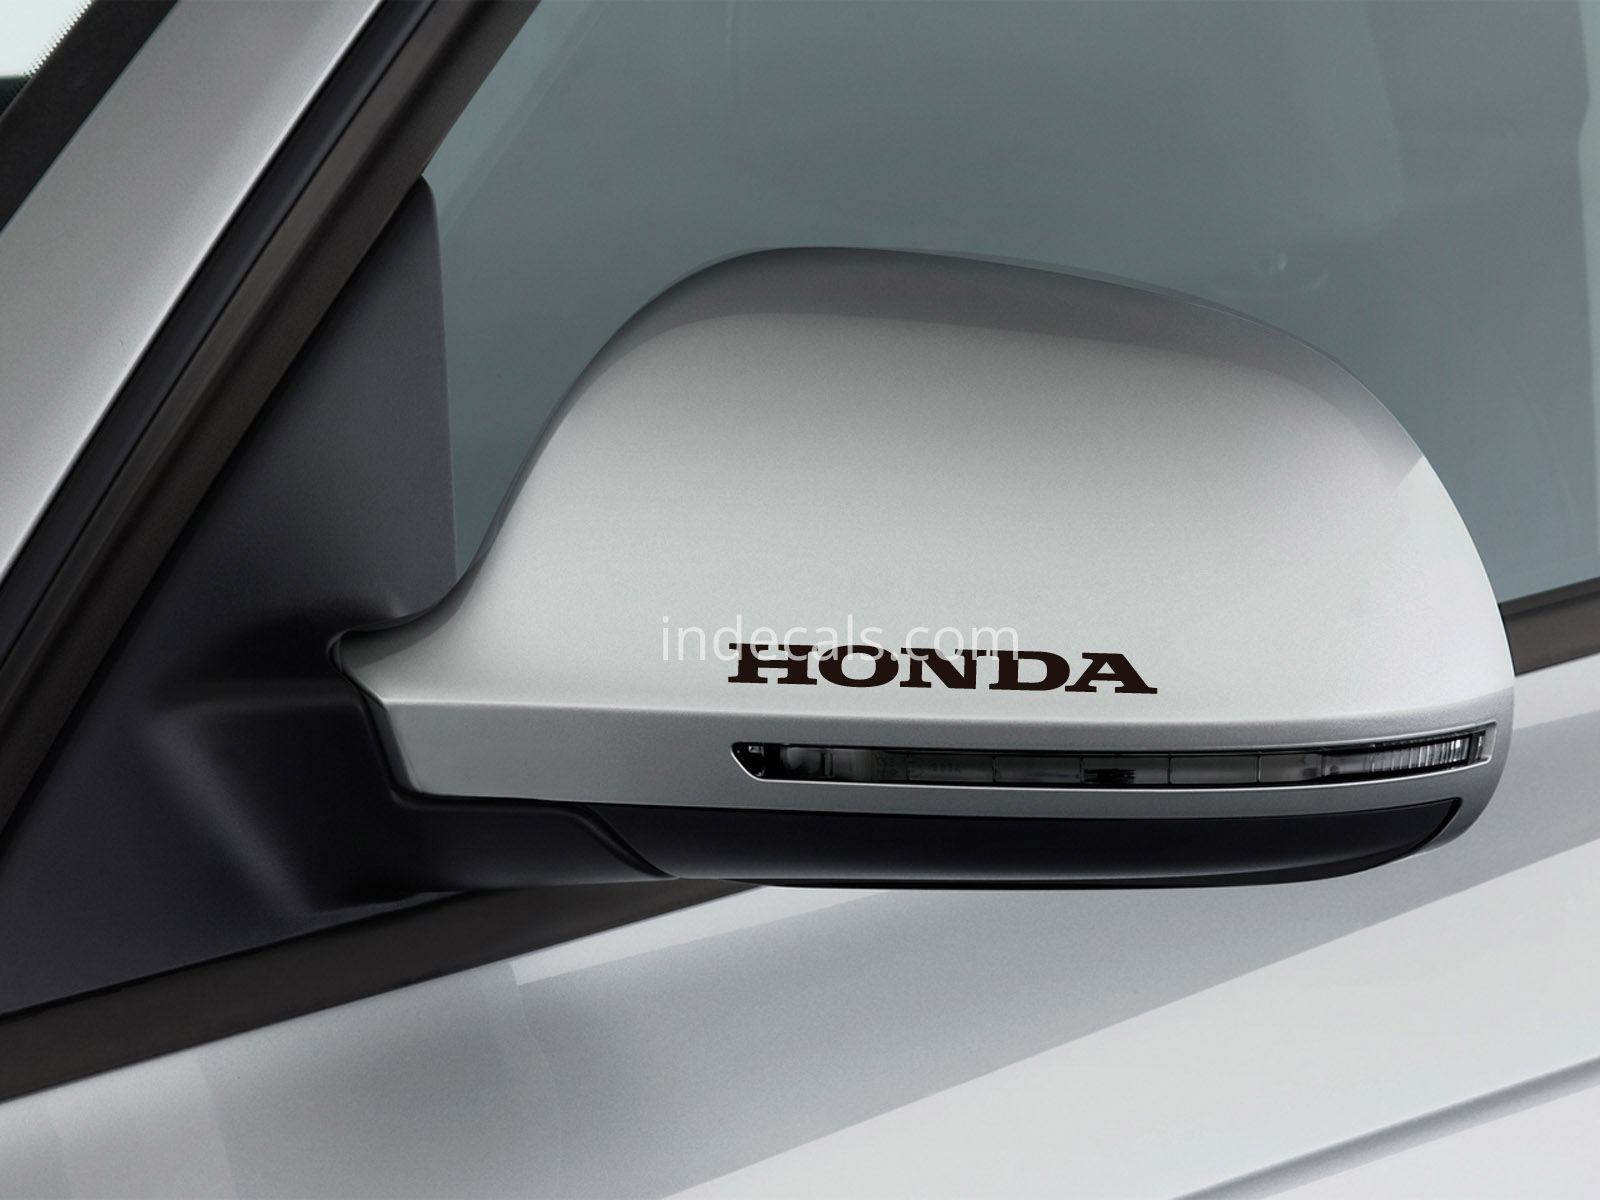 3 x Honda Stickers for Mirrors - Black